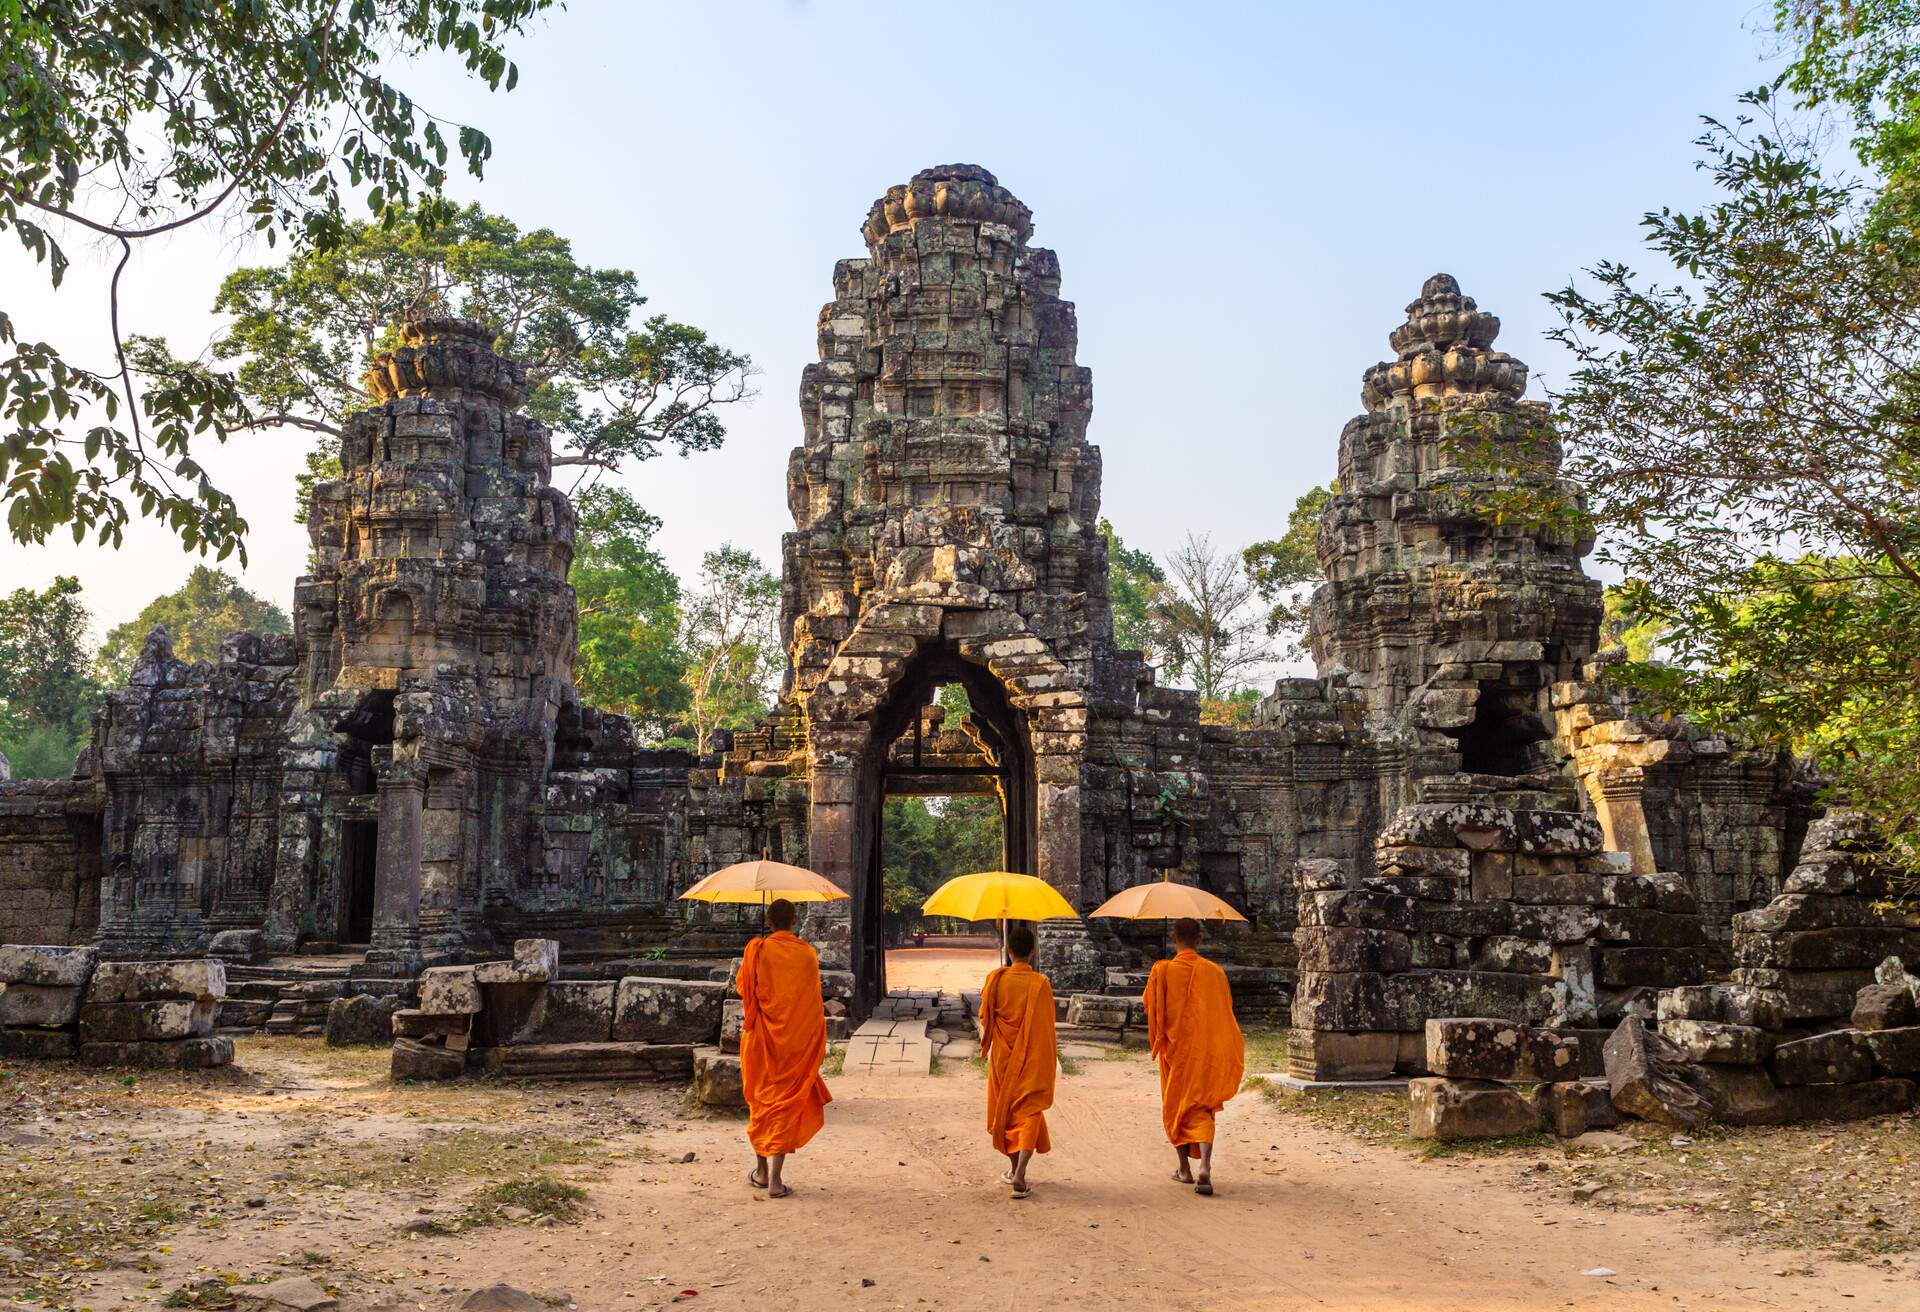 Three buddhist monks with umbrellas, walking inside Angkor Wat temple. Siem Reap, Cambodia